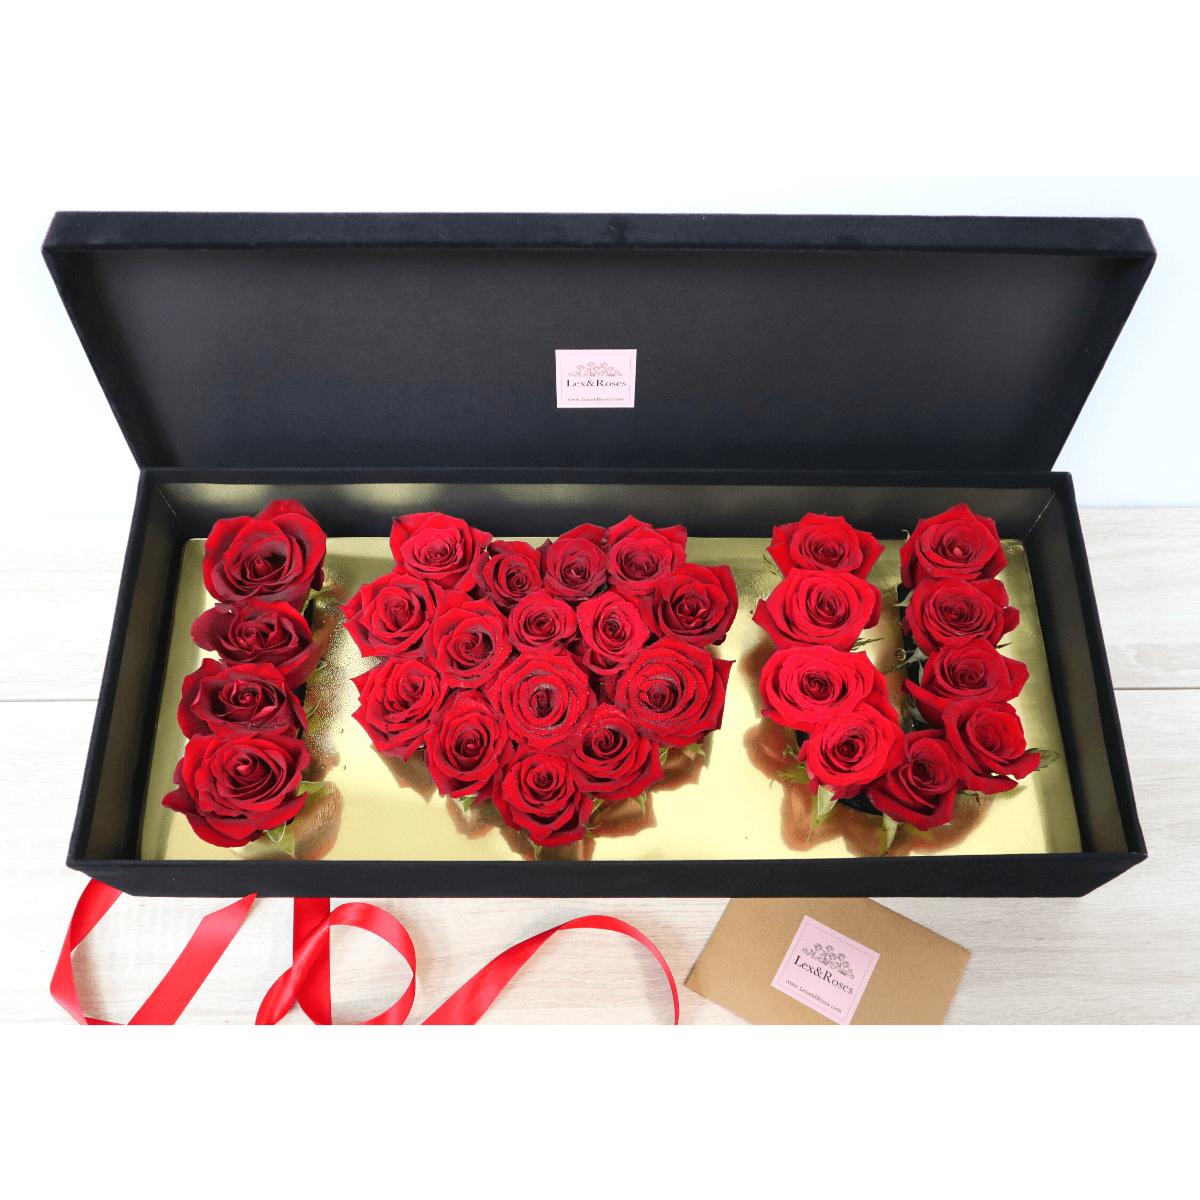 I LOVE YOU rose box – Lex&Roses